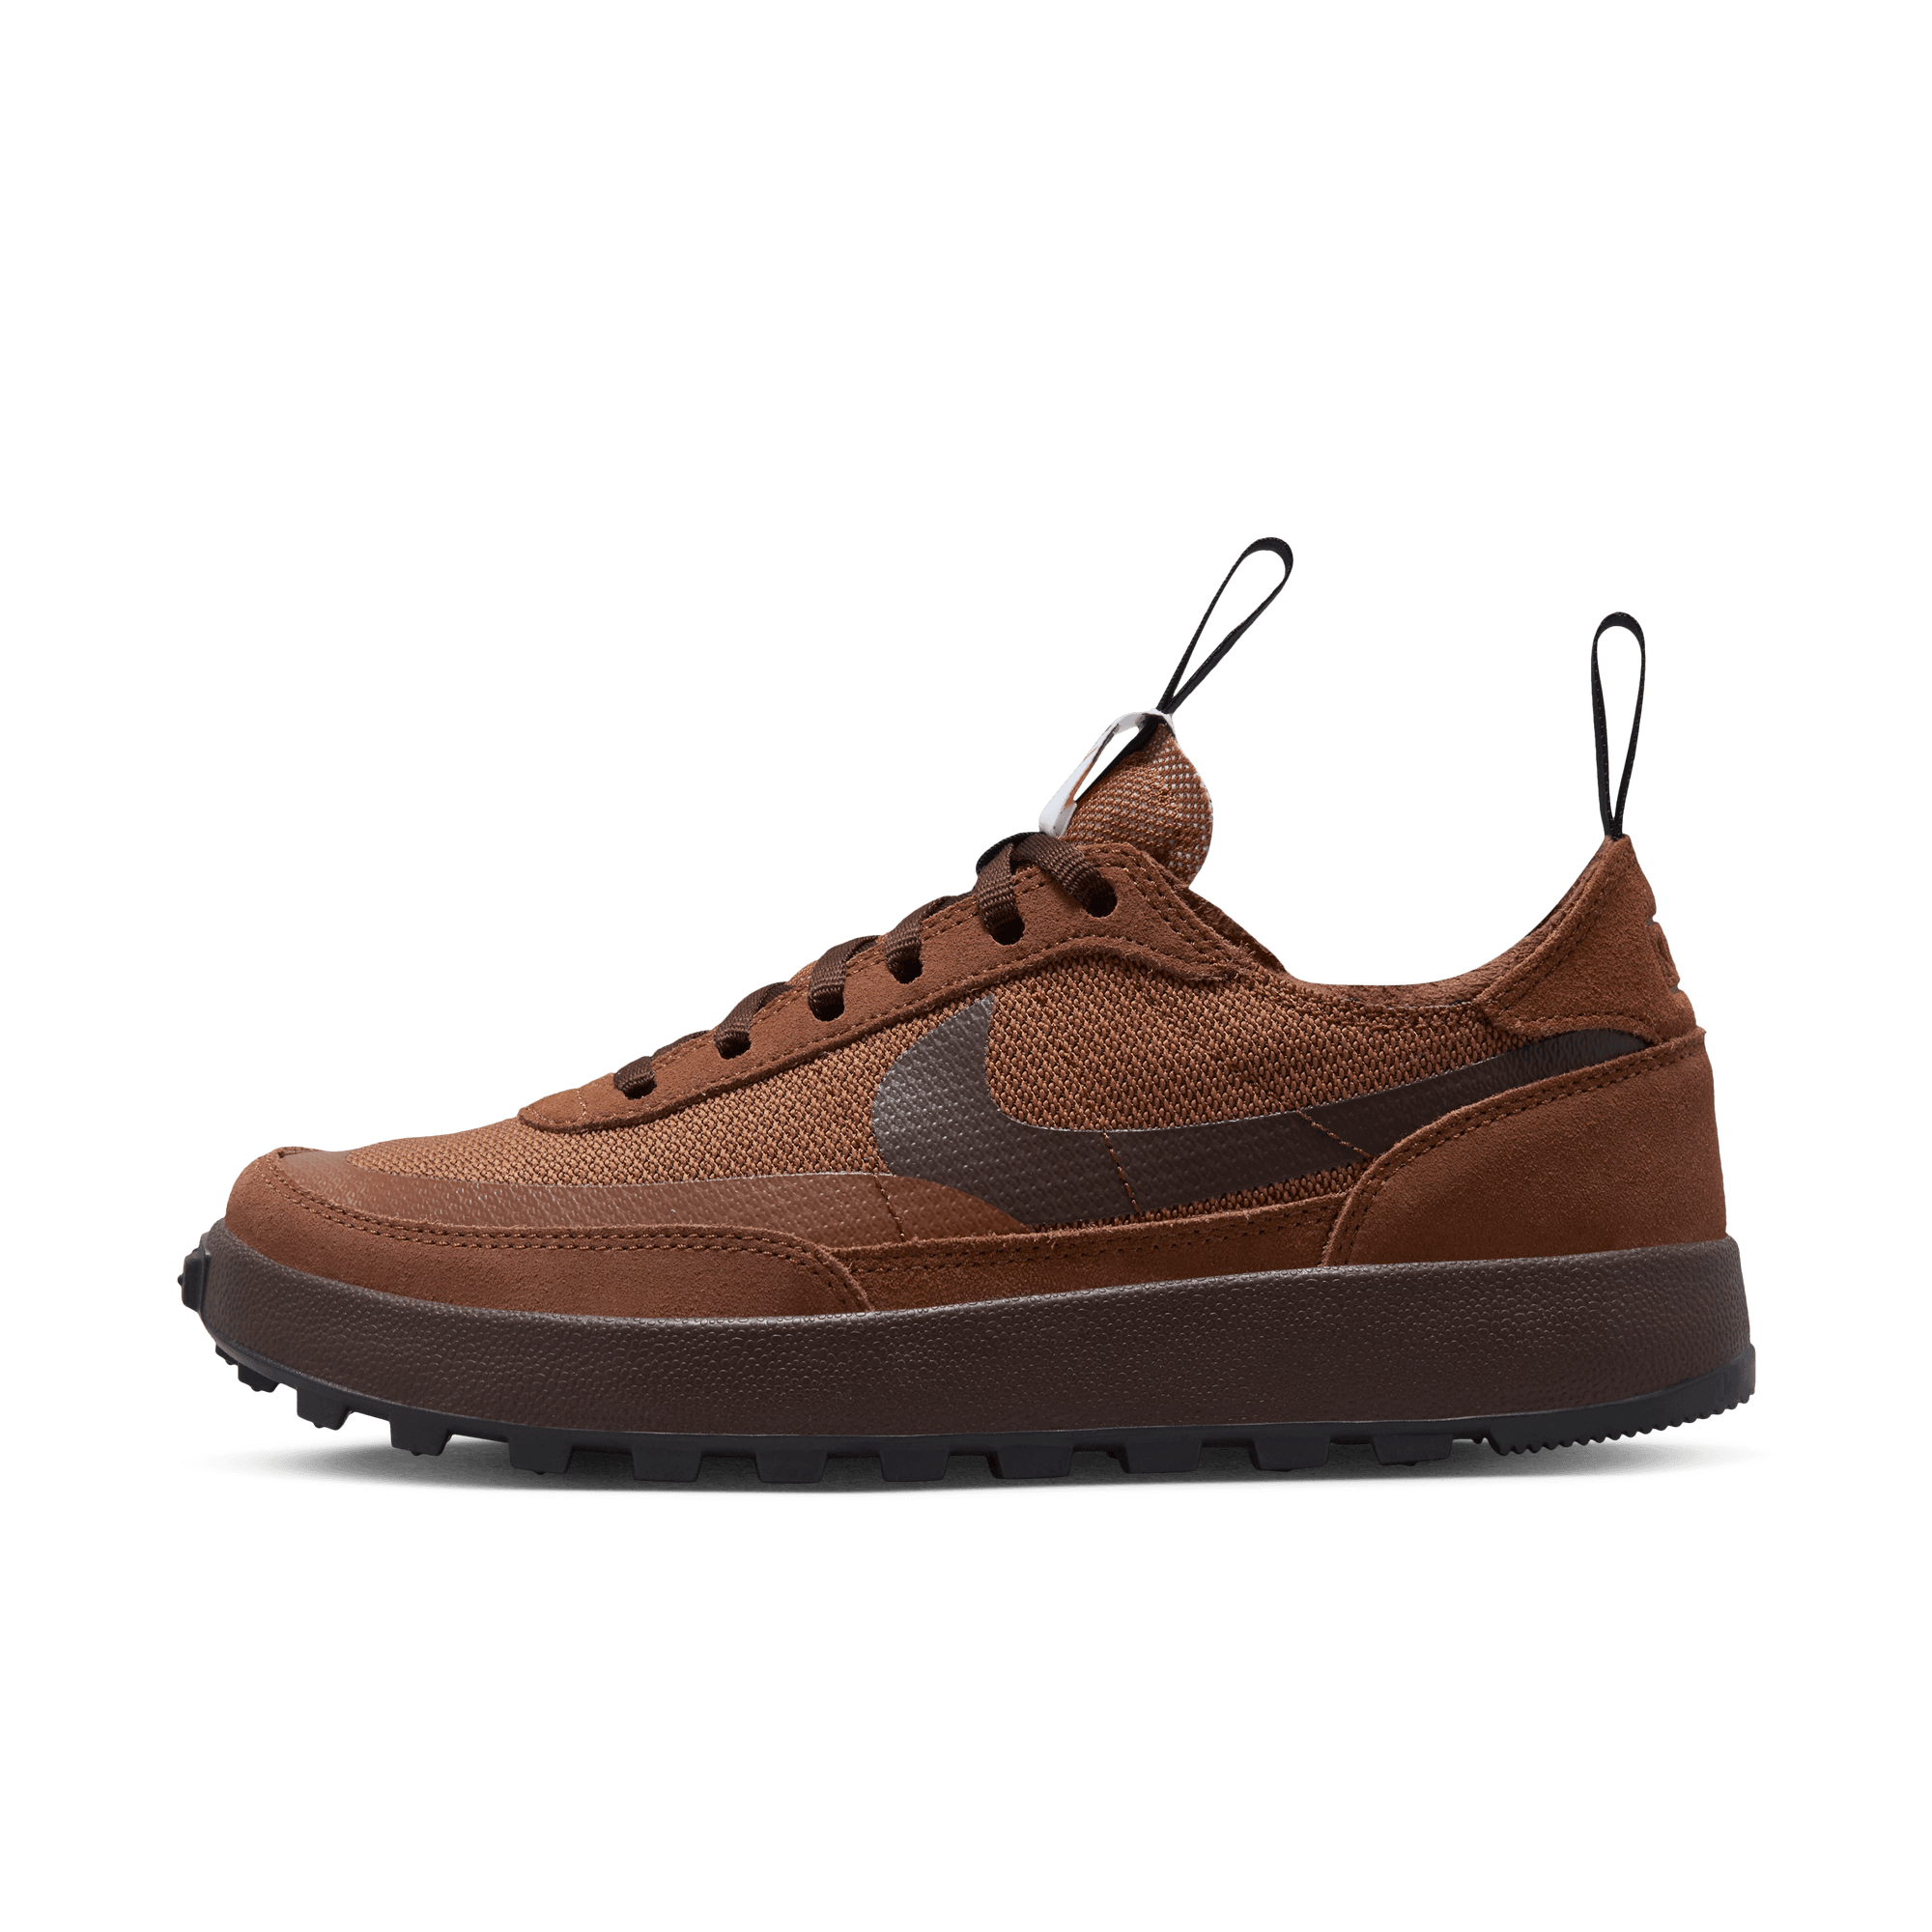 Nike Craft General Purpose x Tom Sachs 'Field Brown'